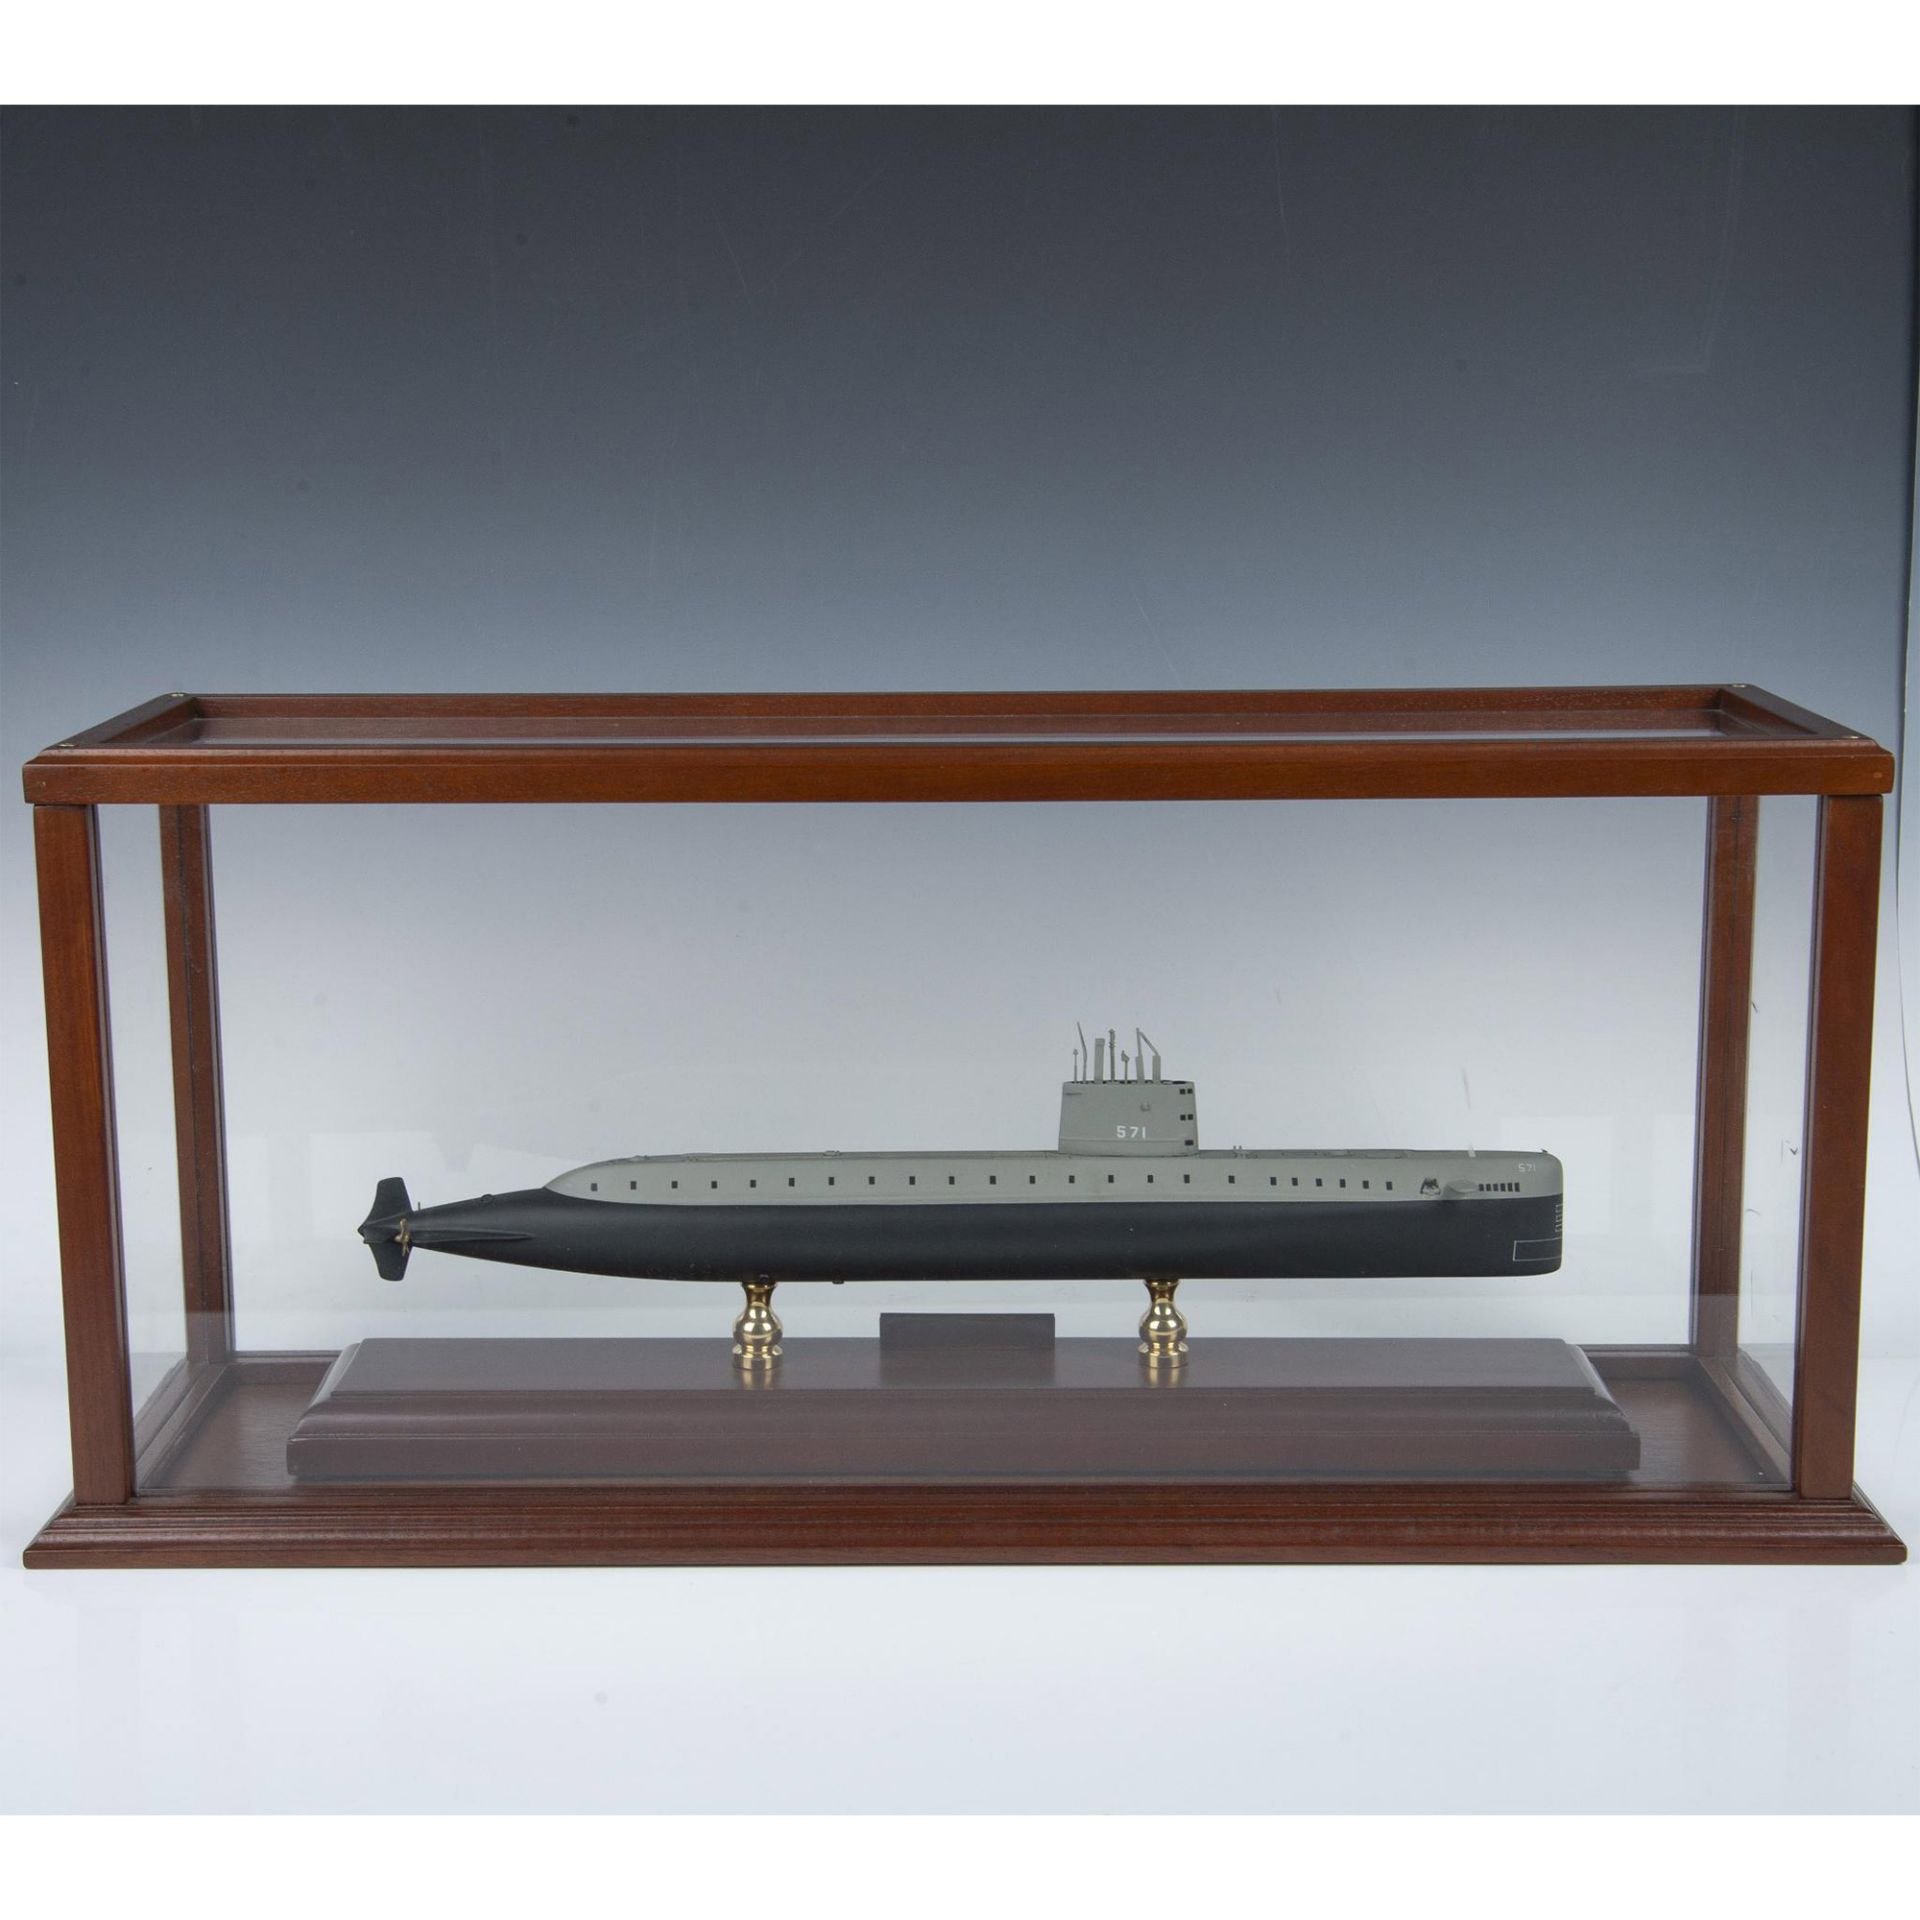 SSN 571 Nautilus Submarine 1/192 Scale Model - Image 8 of 12